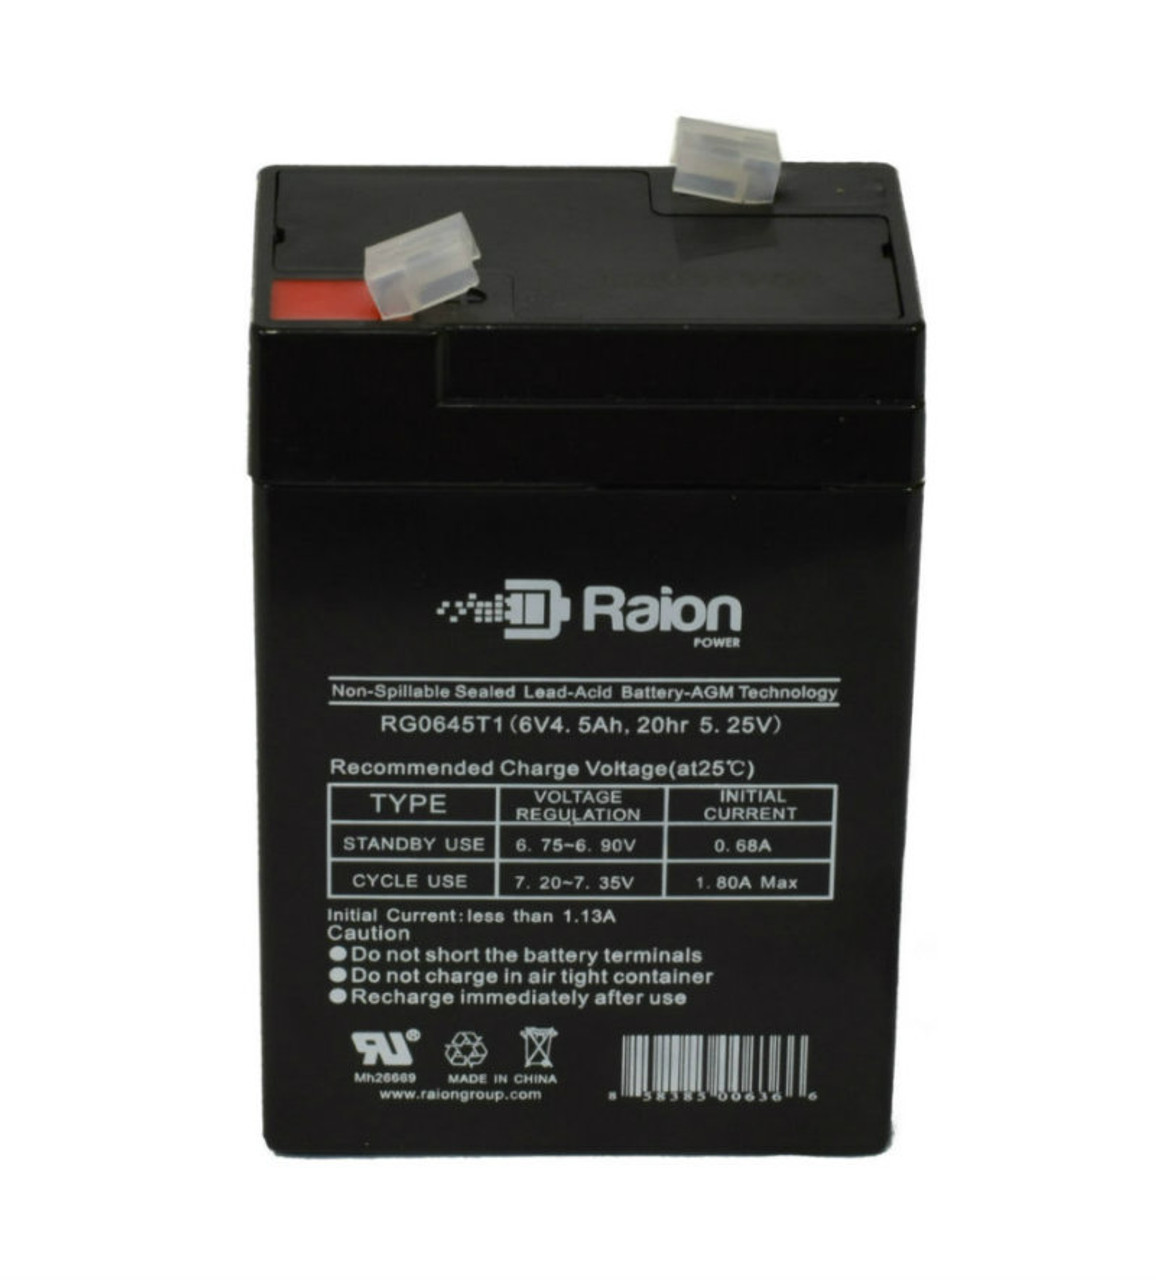 Raion Power RG0645T1 Replacement Battery Cartridge for Emergi-Lite QSM1